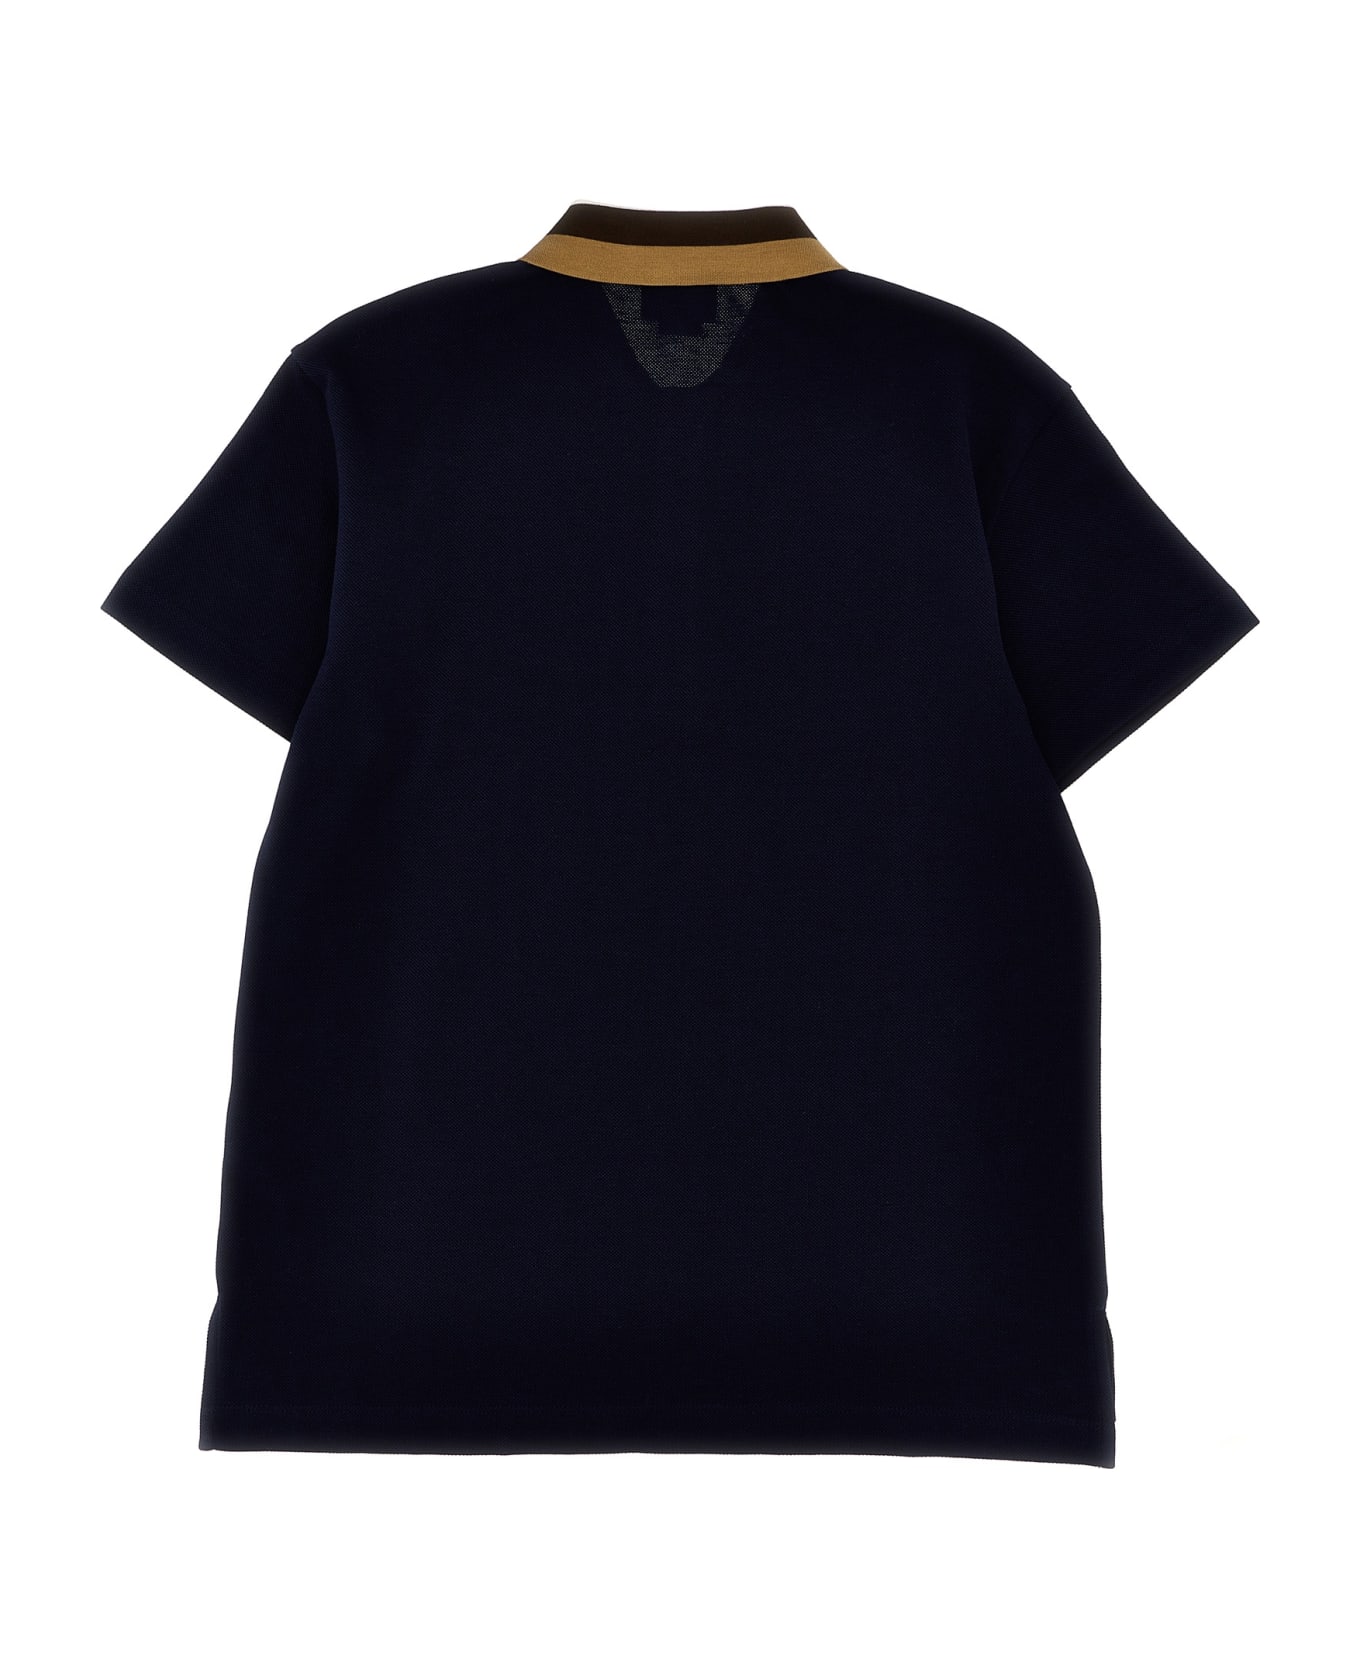 Fendi Logo Collar Polo Shirt Tシャツ＆ポロシャツ